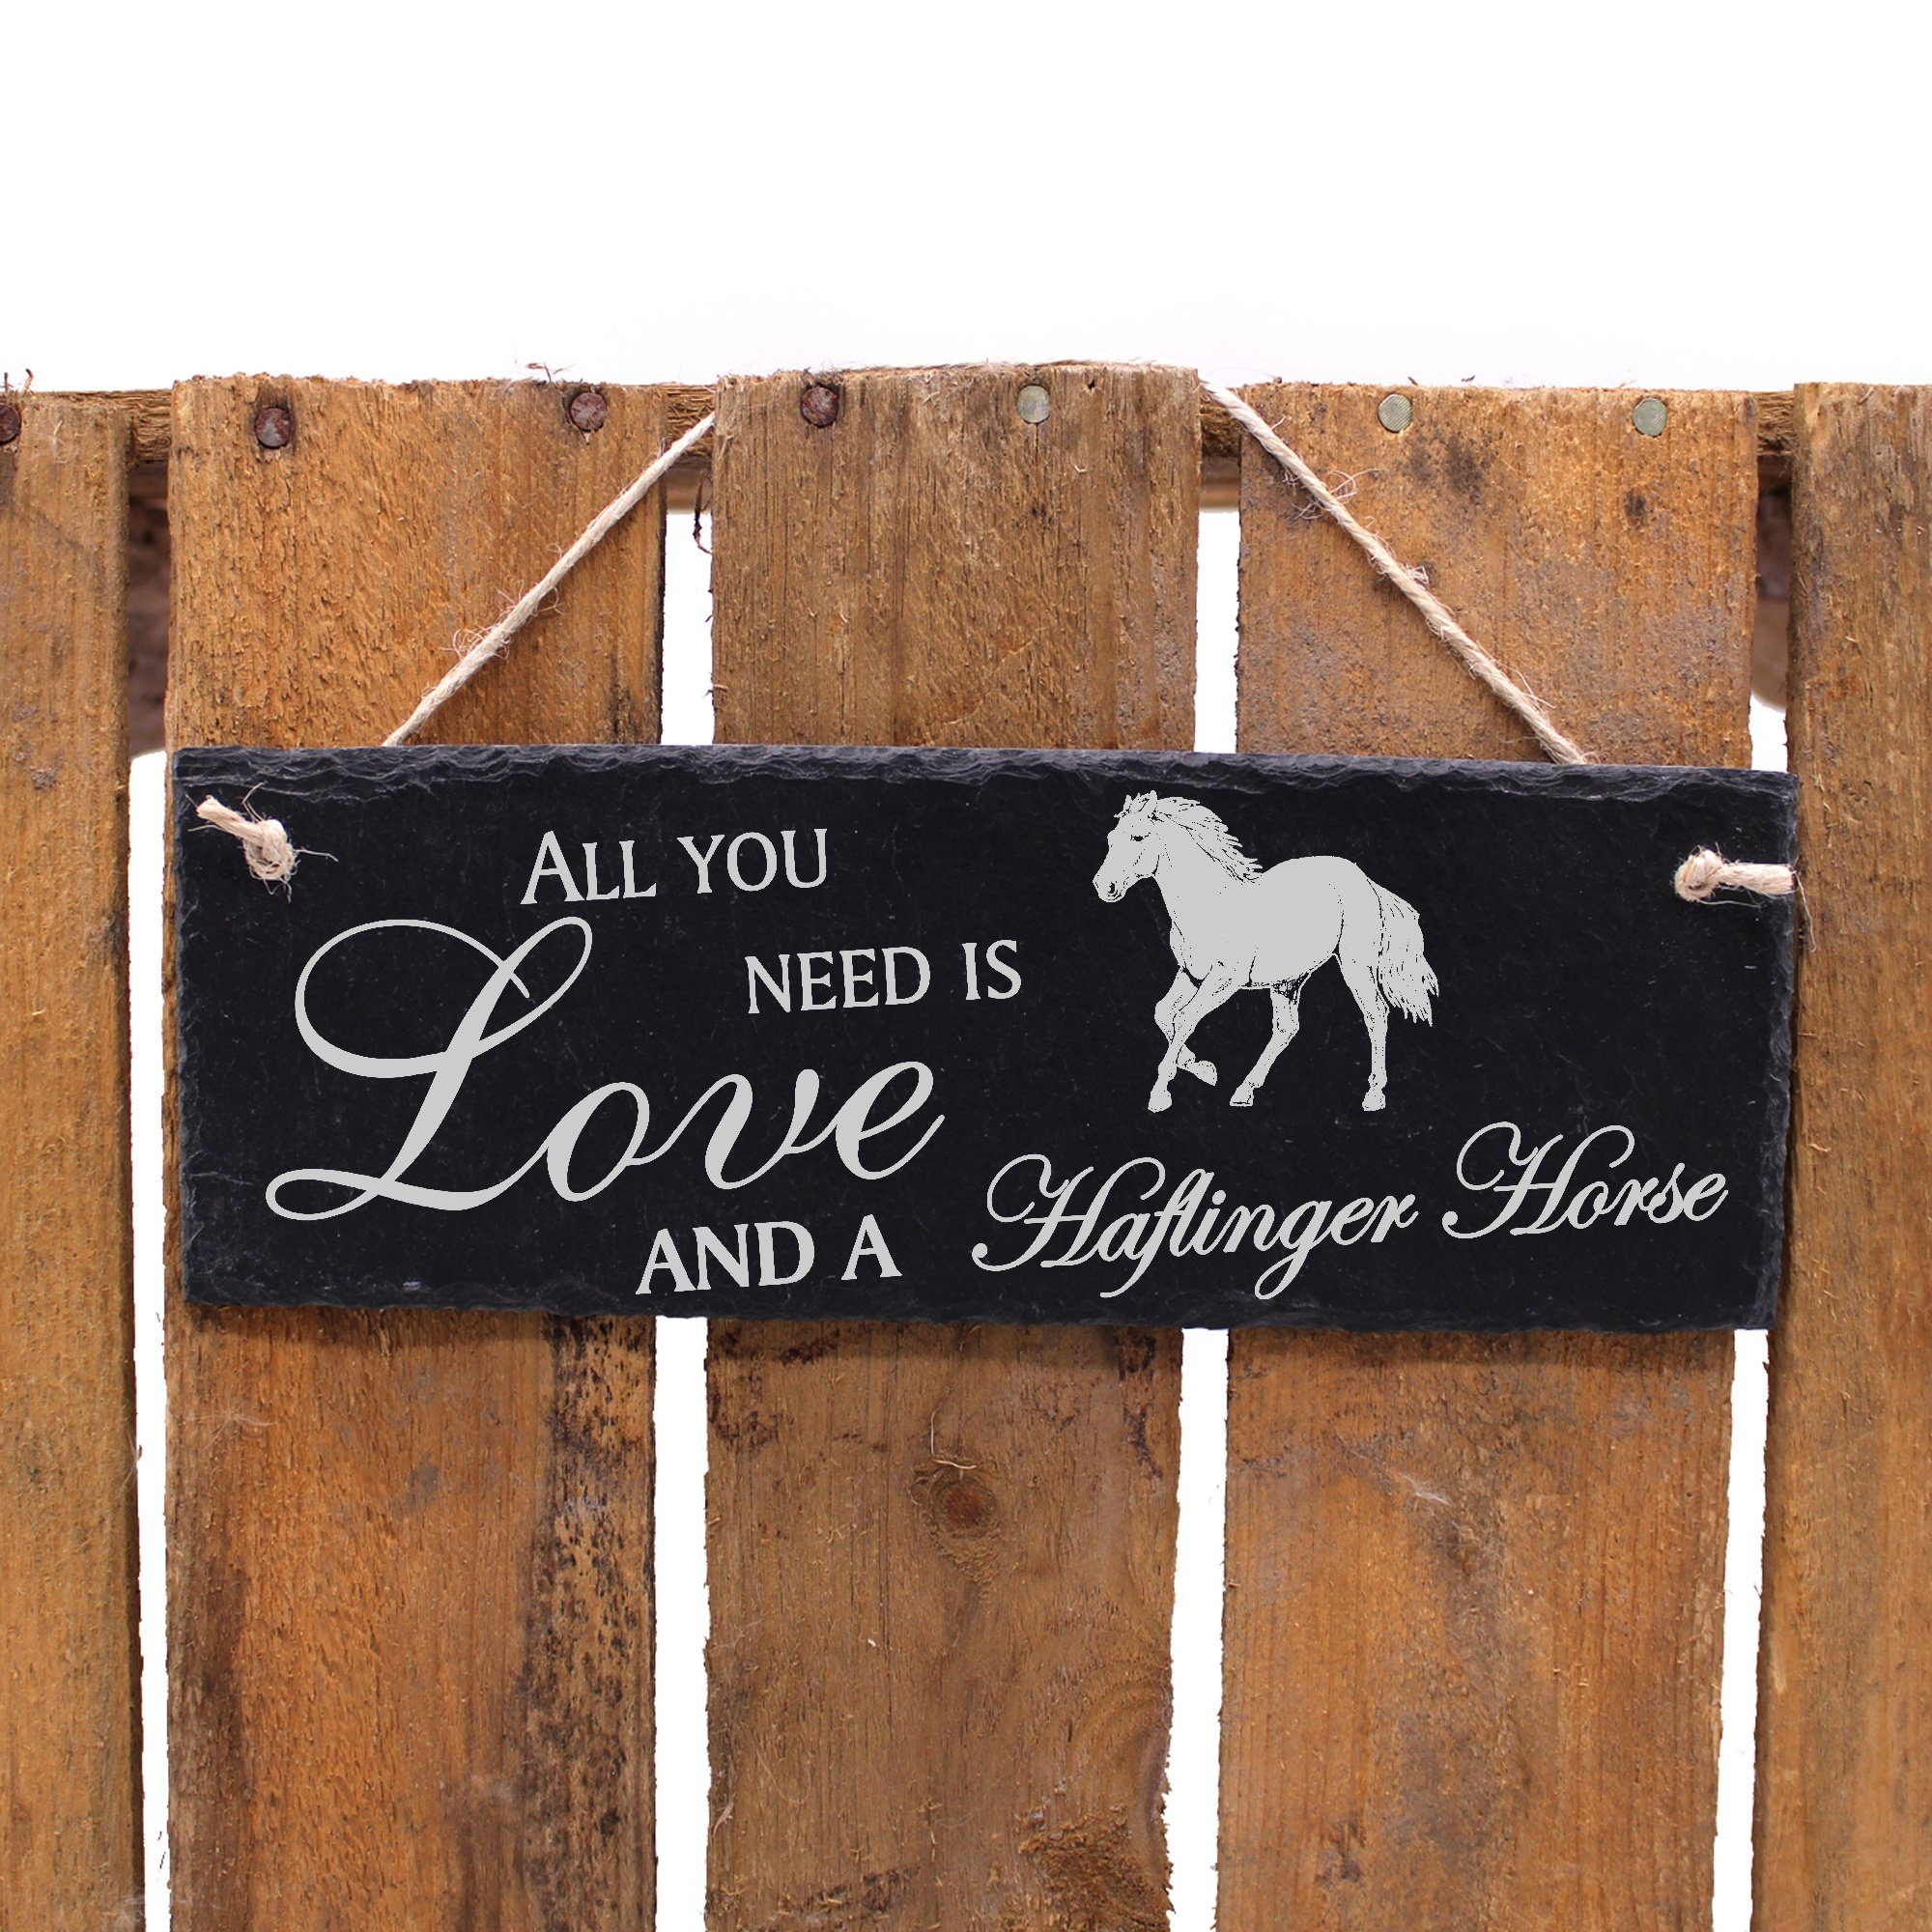 Dekolando Hängedekoration you need 22x8cm a All Love Horse Haflinger Pferd is and Haflinger